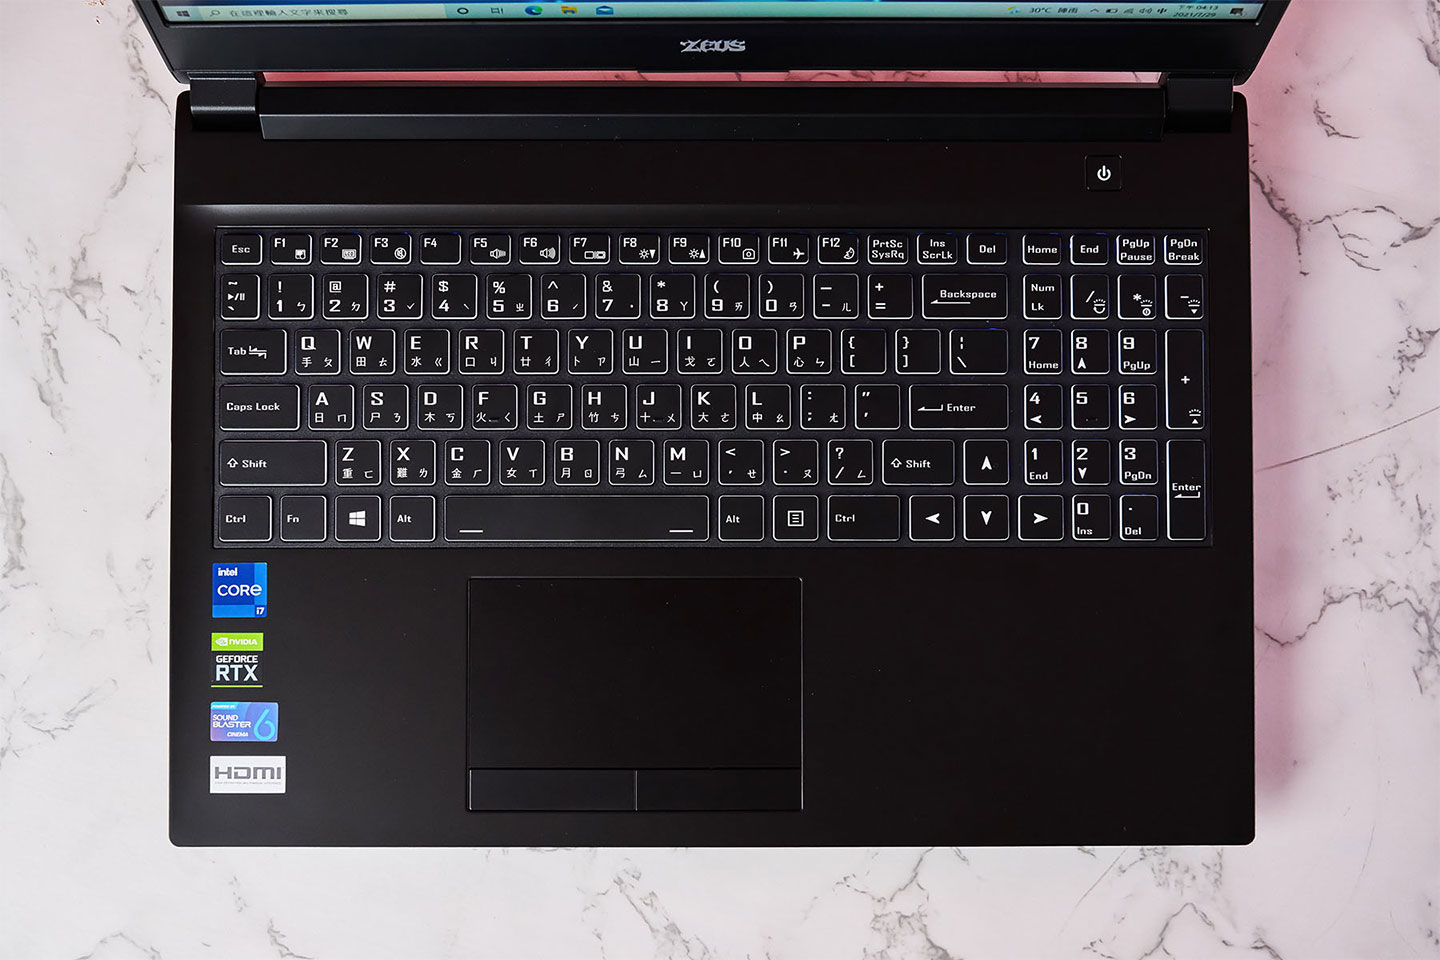 Genuine 捷元 ZEUS 15H 的機身 C 面空間較大，因此配置了帶九宮格數字鍵的孤島式鍵盤，下方也有大尺寸的觸控板。